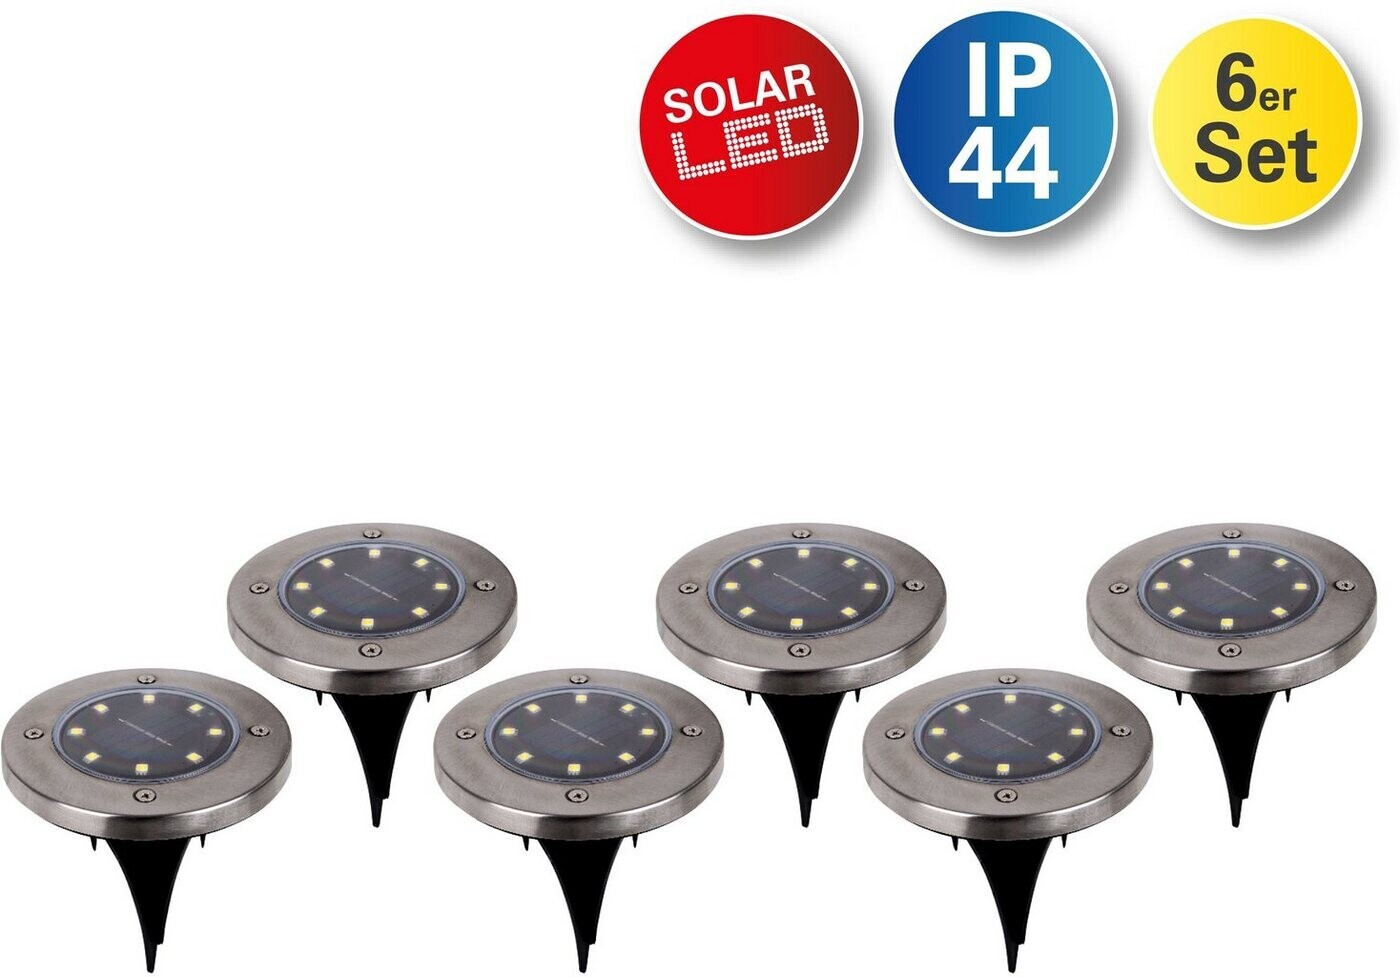 Näve Kian Solarleuchtenset (5228806) silber-matt bei € Preisvergleich 6-teilig 34,99 ab 